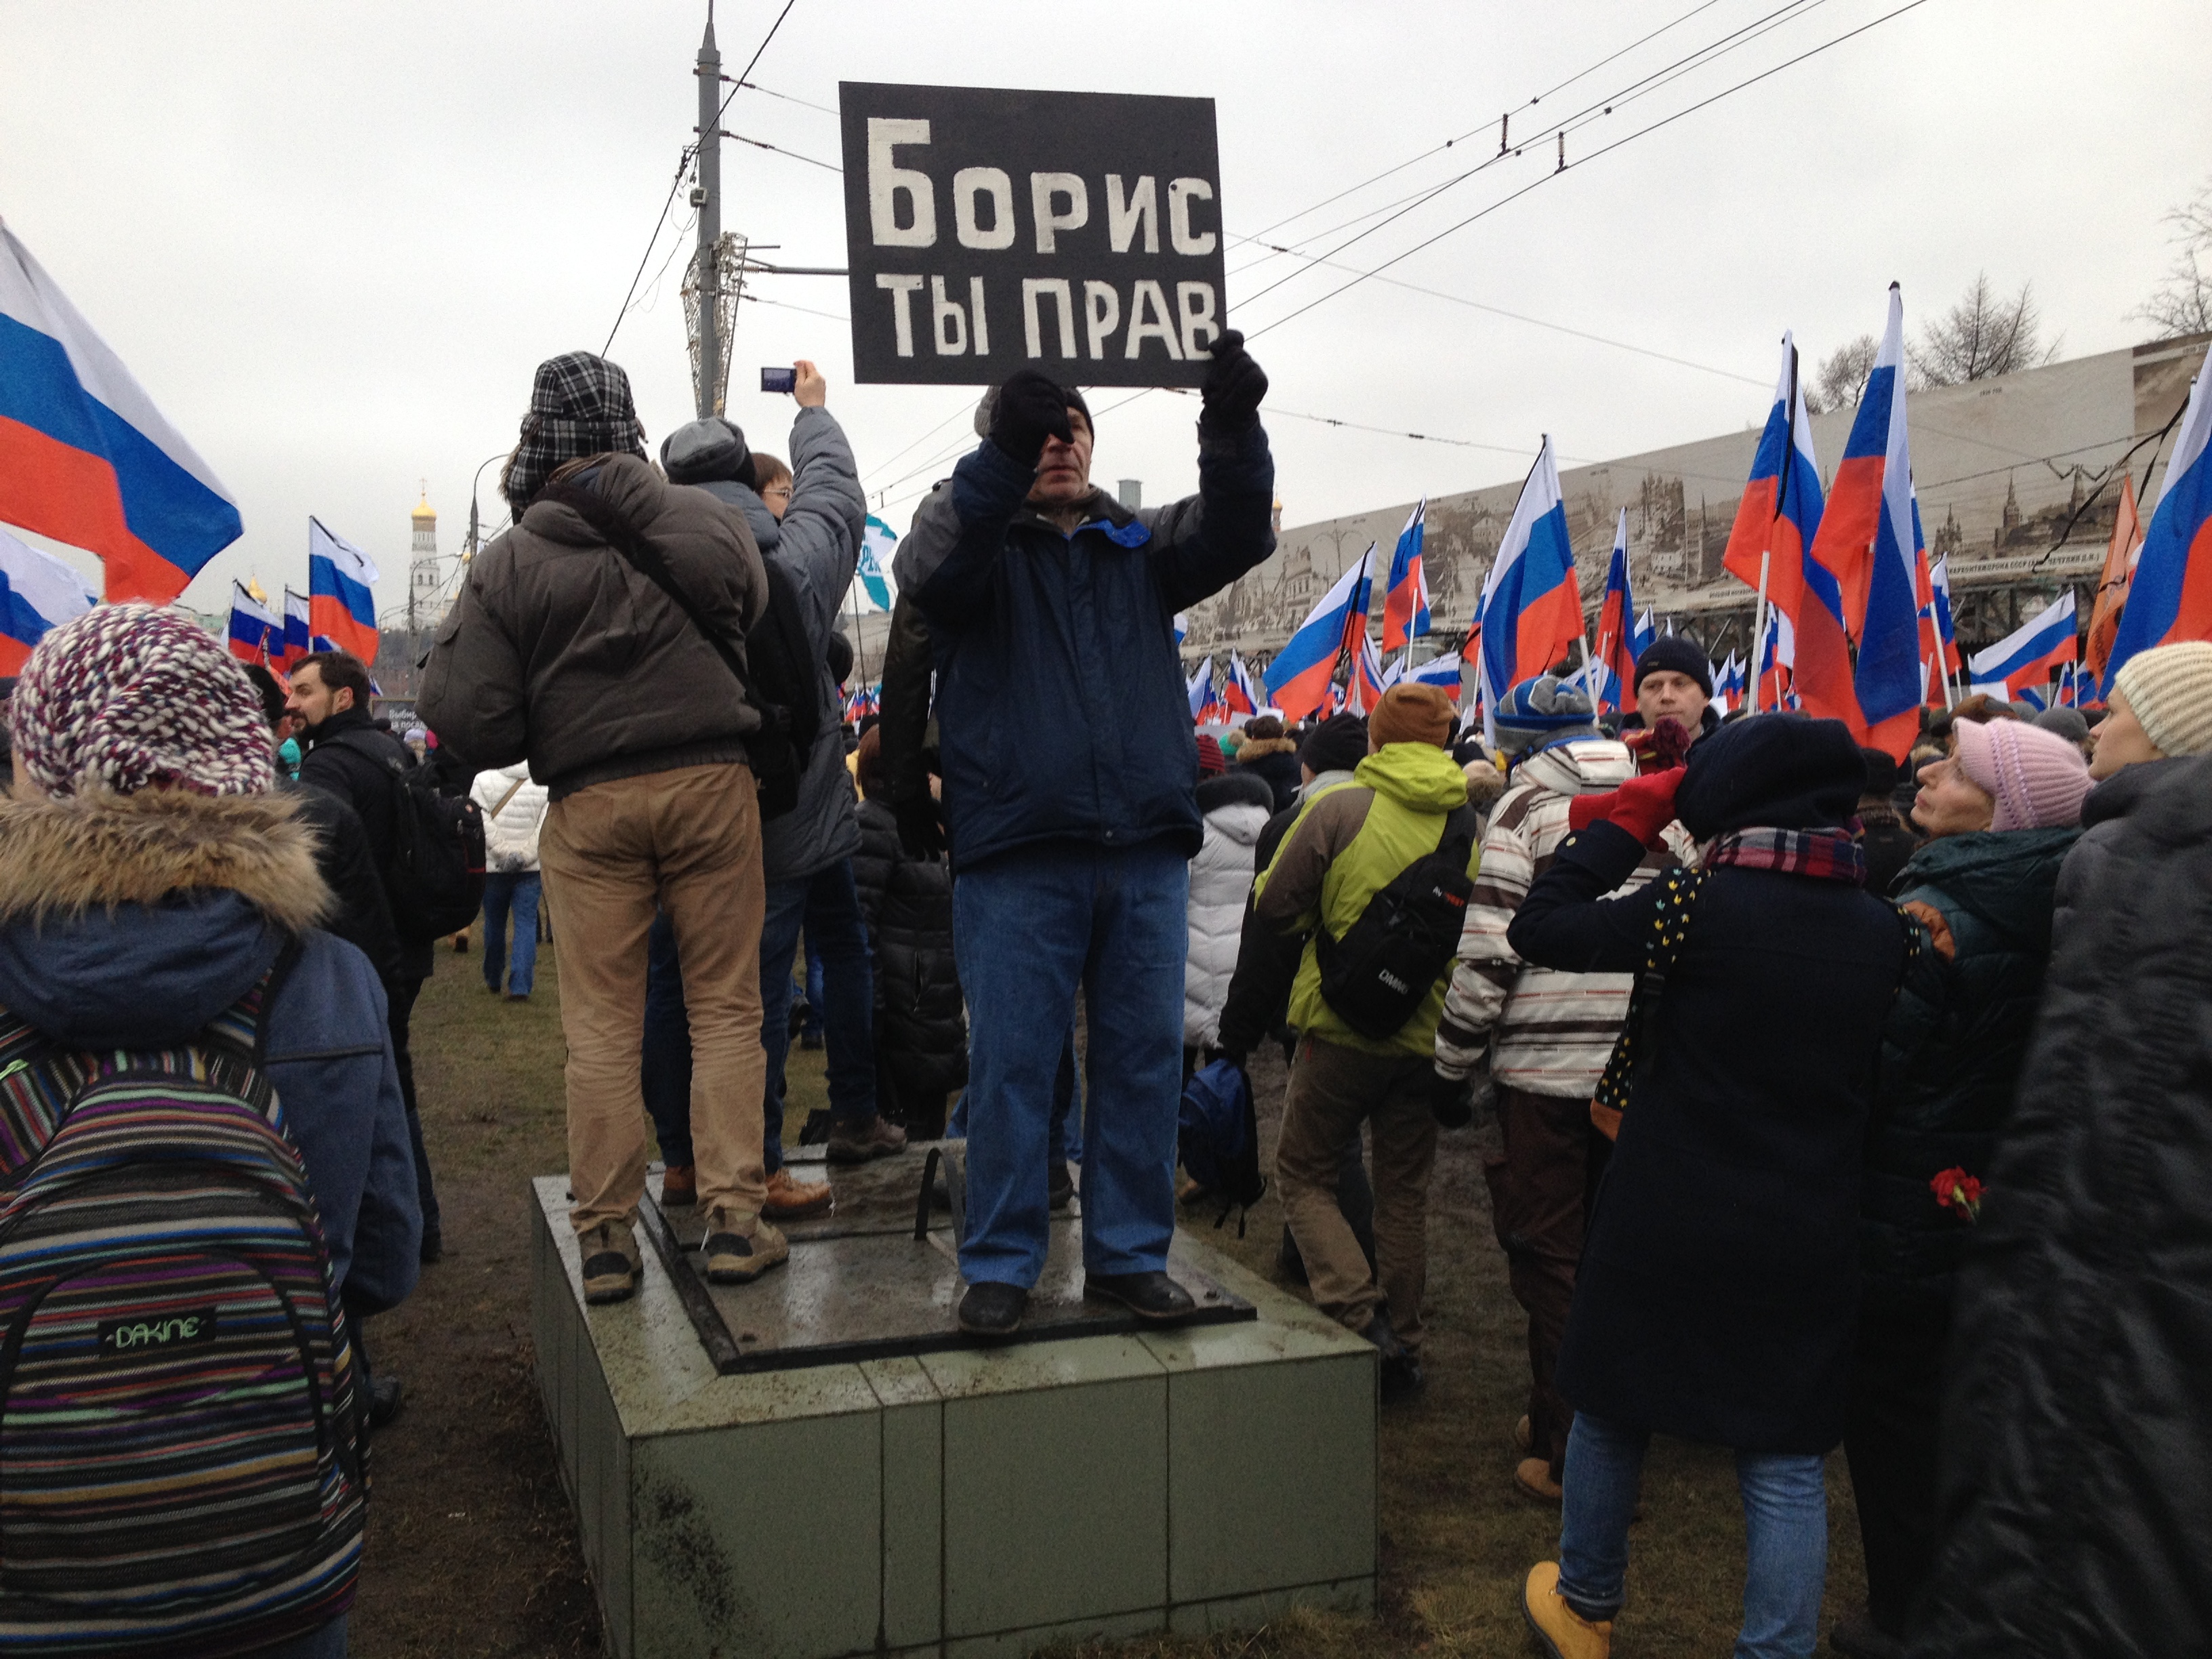 Марш молчания. Репортаж с шествия в память о Борисе Немцове